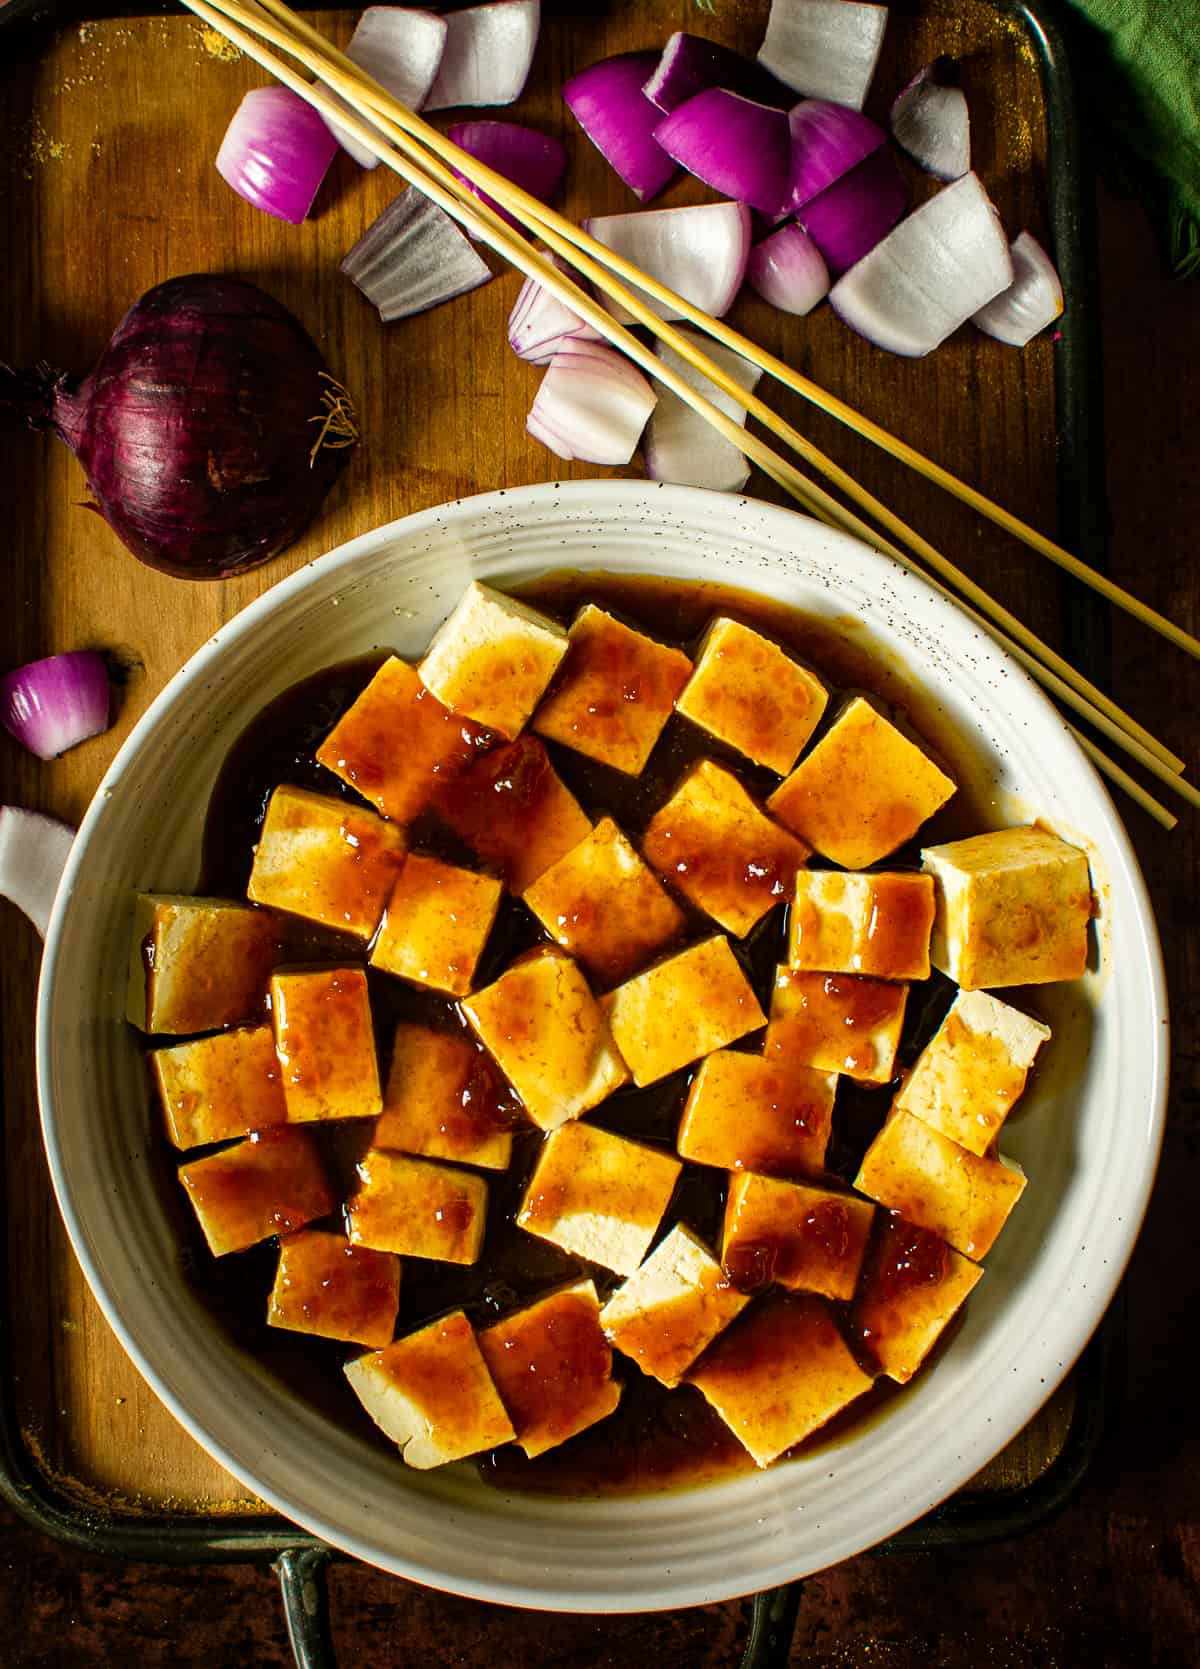 Tofu in bowl with teriyaki sauce.